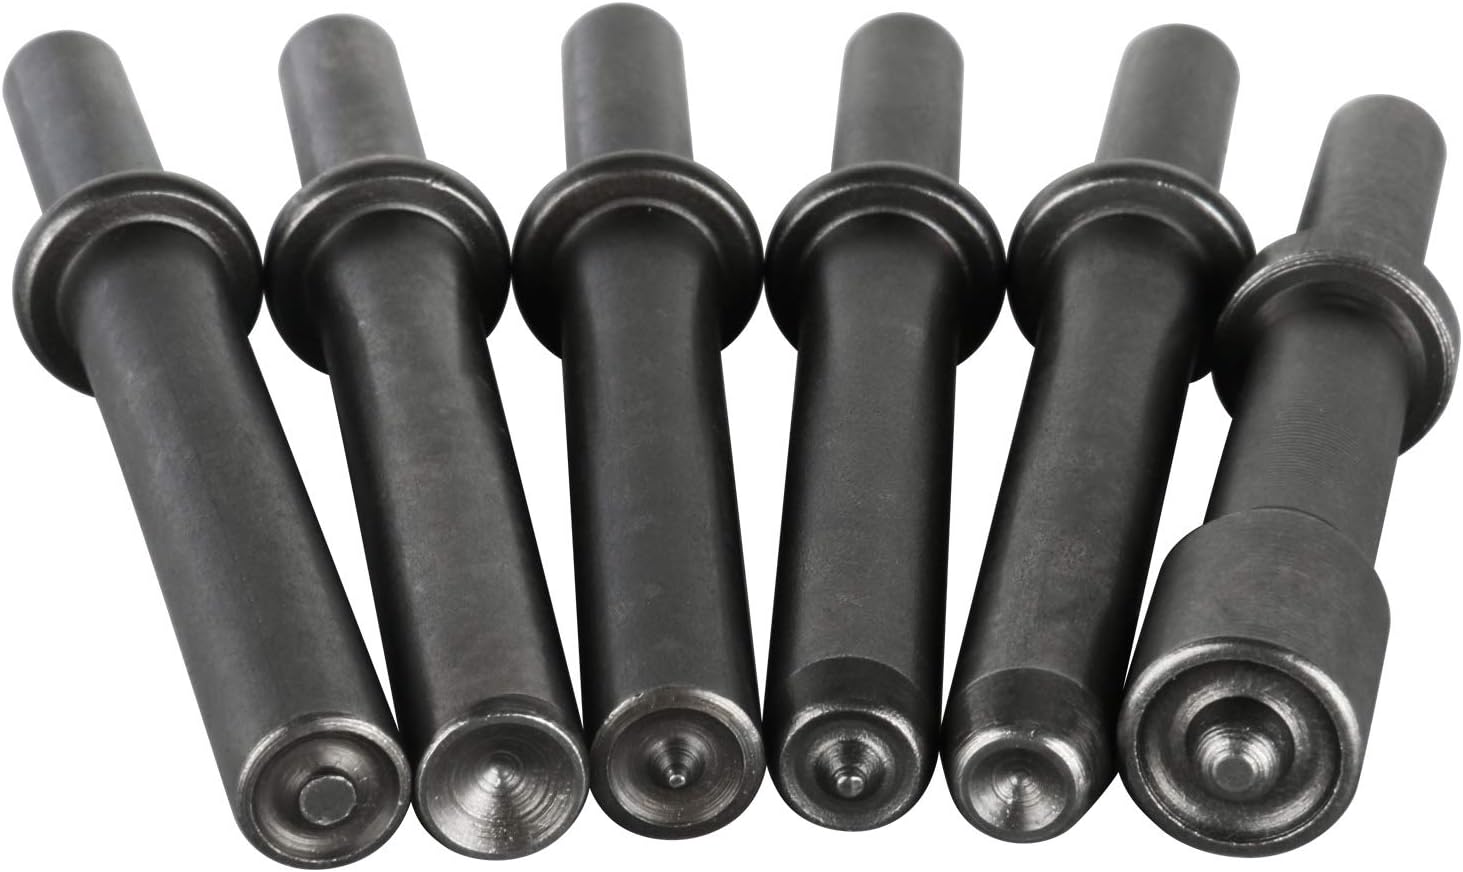 YaeKoo 7 Pcs Air Hammer Bits Accessories 0.401 Shank Heavy Duty Smoothing Pneumatic Air Rivet Hammer Chisel High Carbon Steel Bits Ext